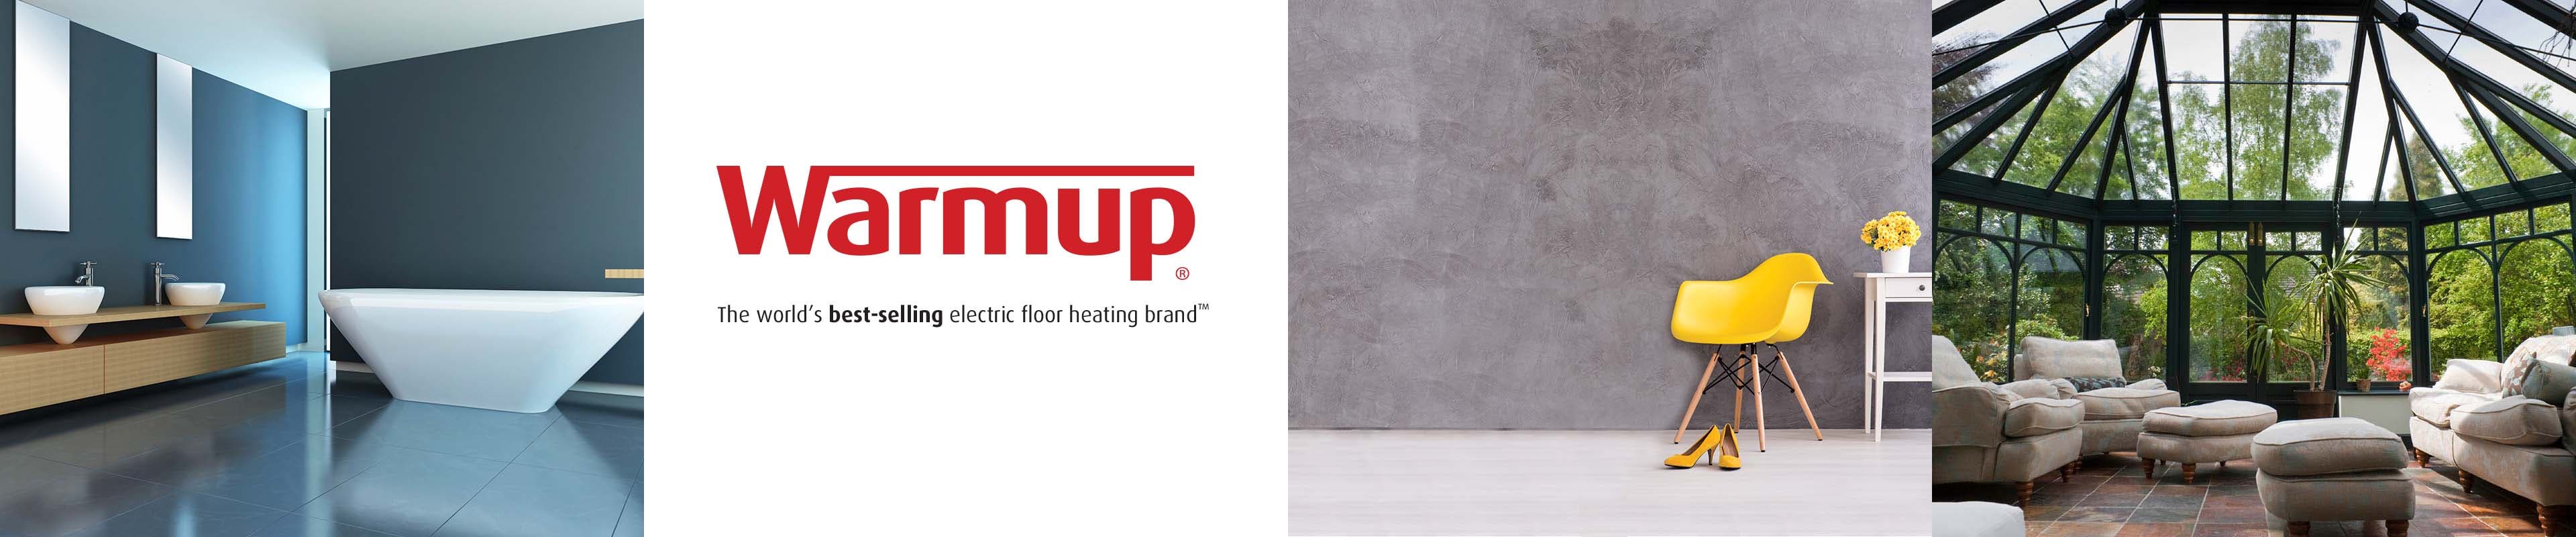 Warmup Floor Heating Banner